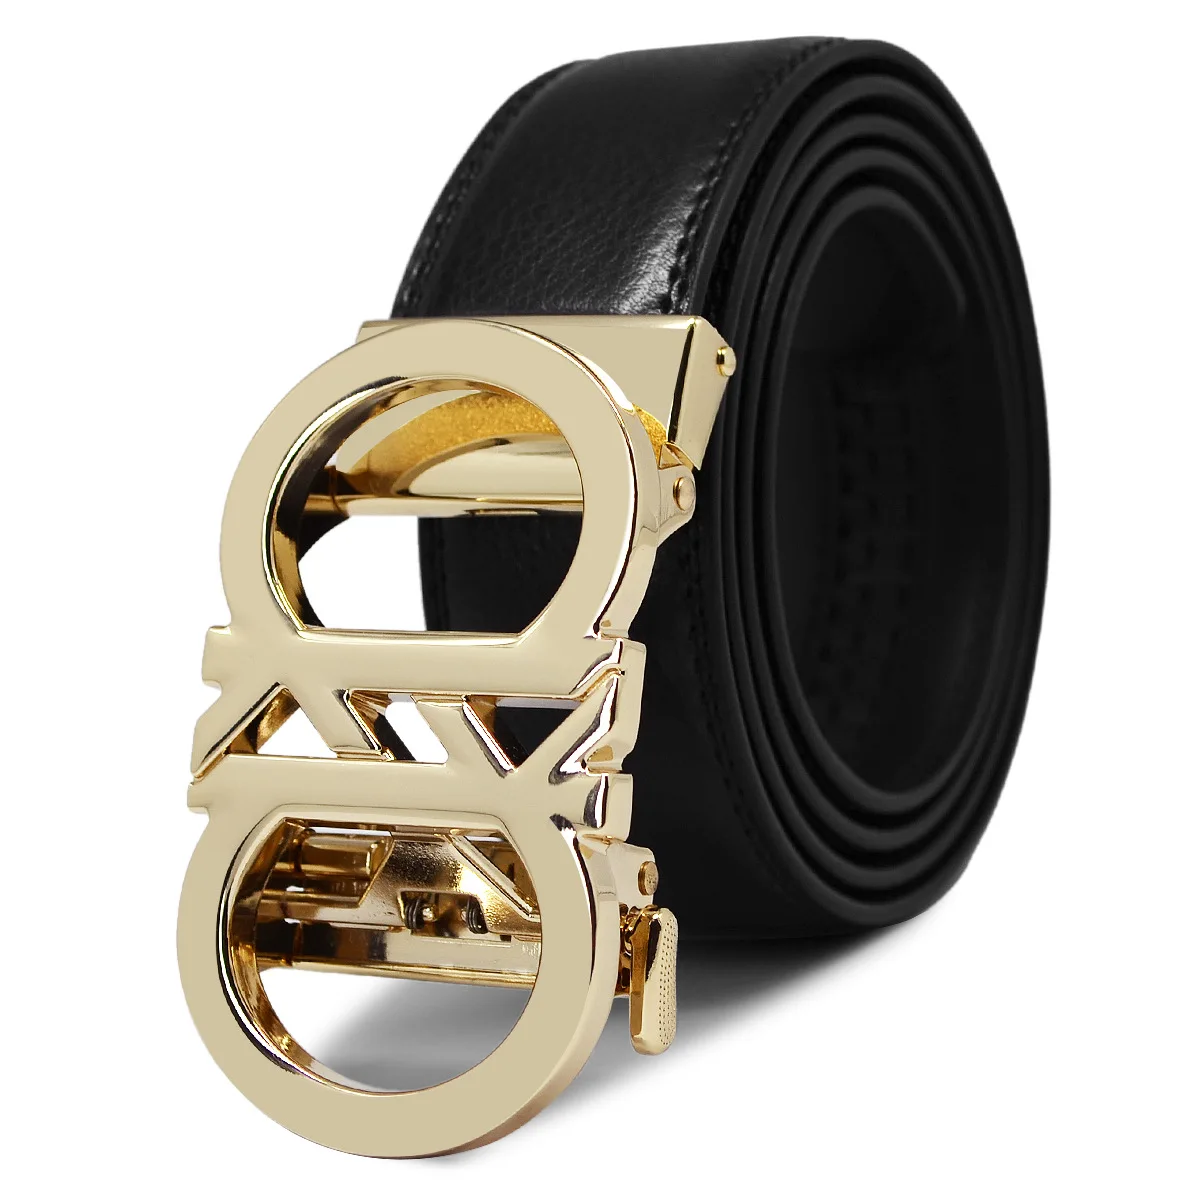 New Automatic Buckle Men Belts Fashion Business Belt Famous Brand Luxury Belts for Men Leather